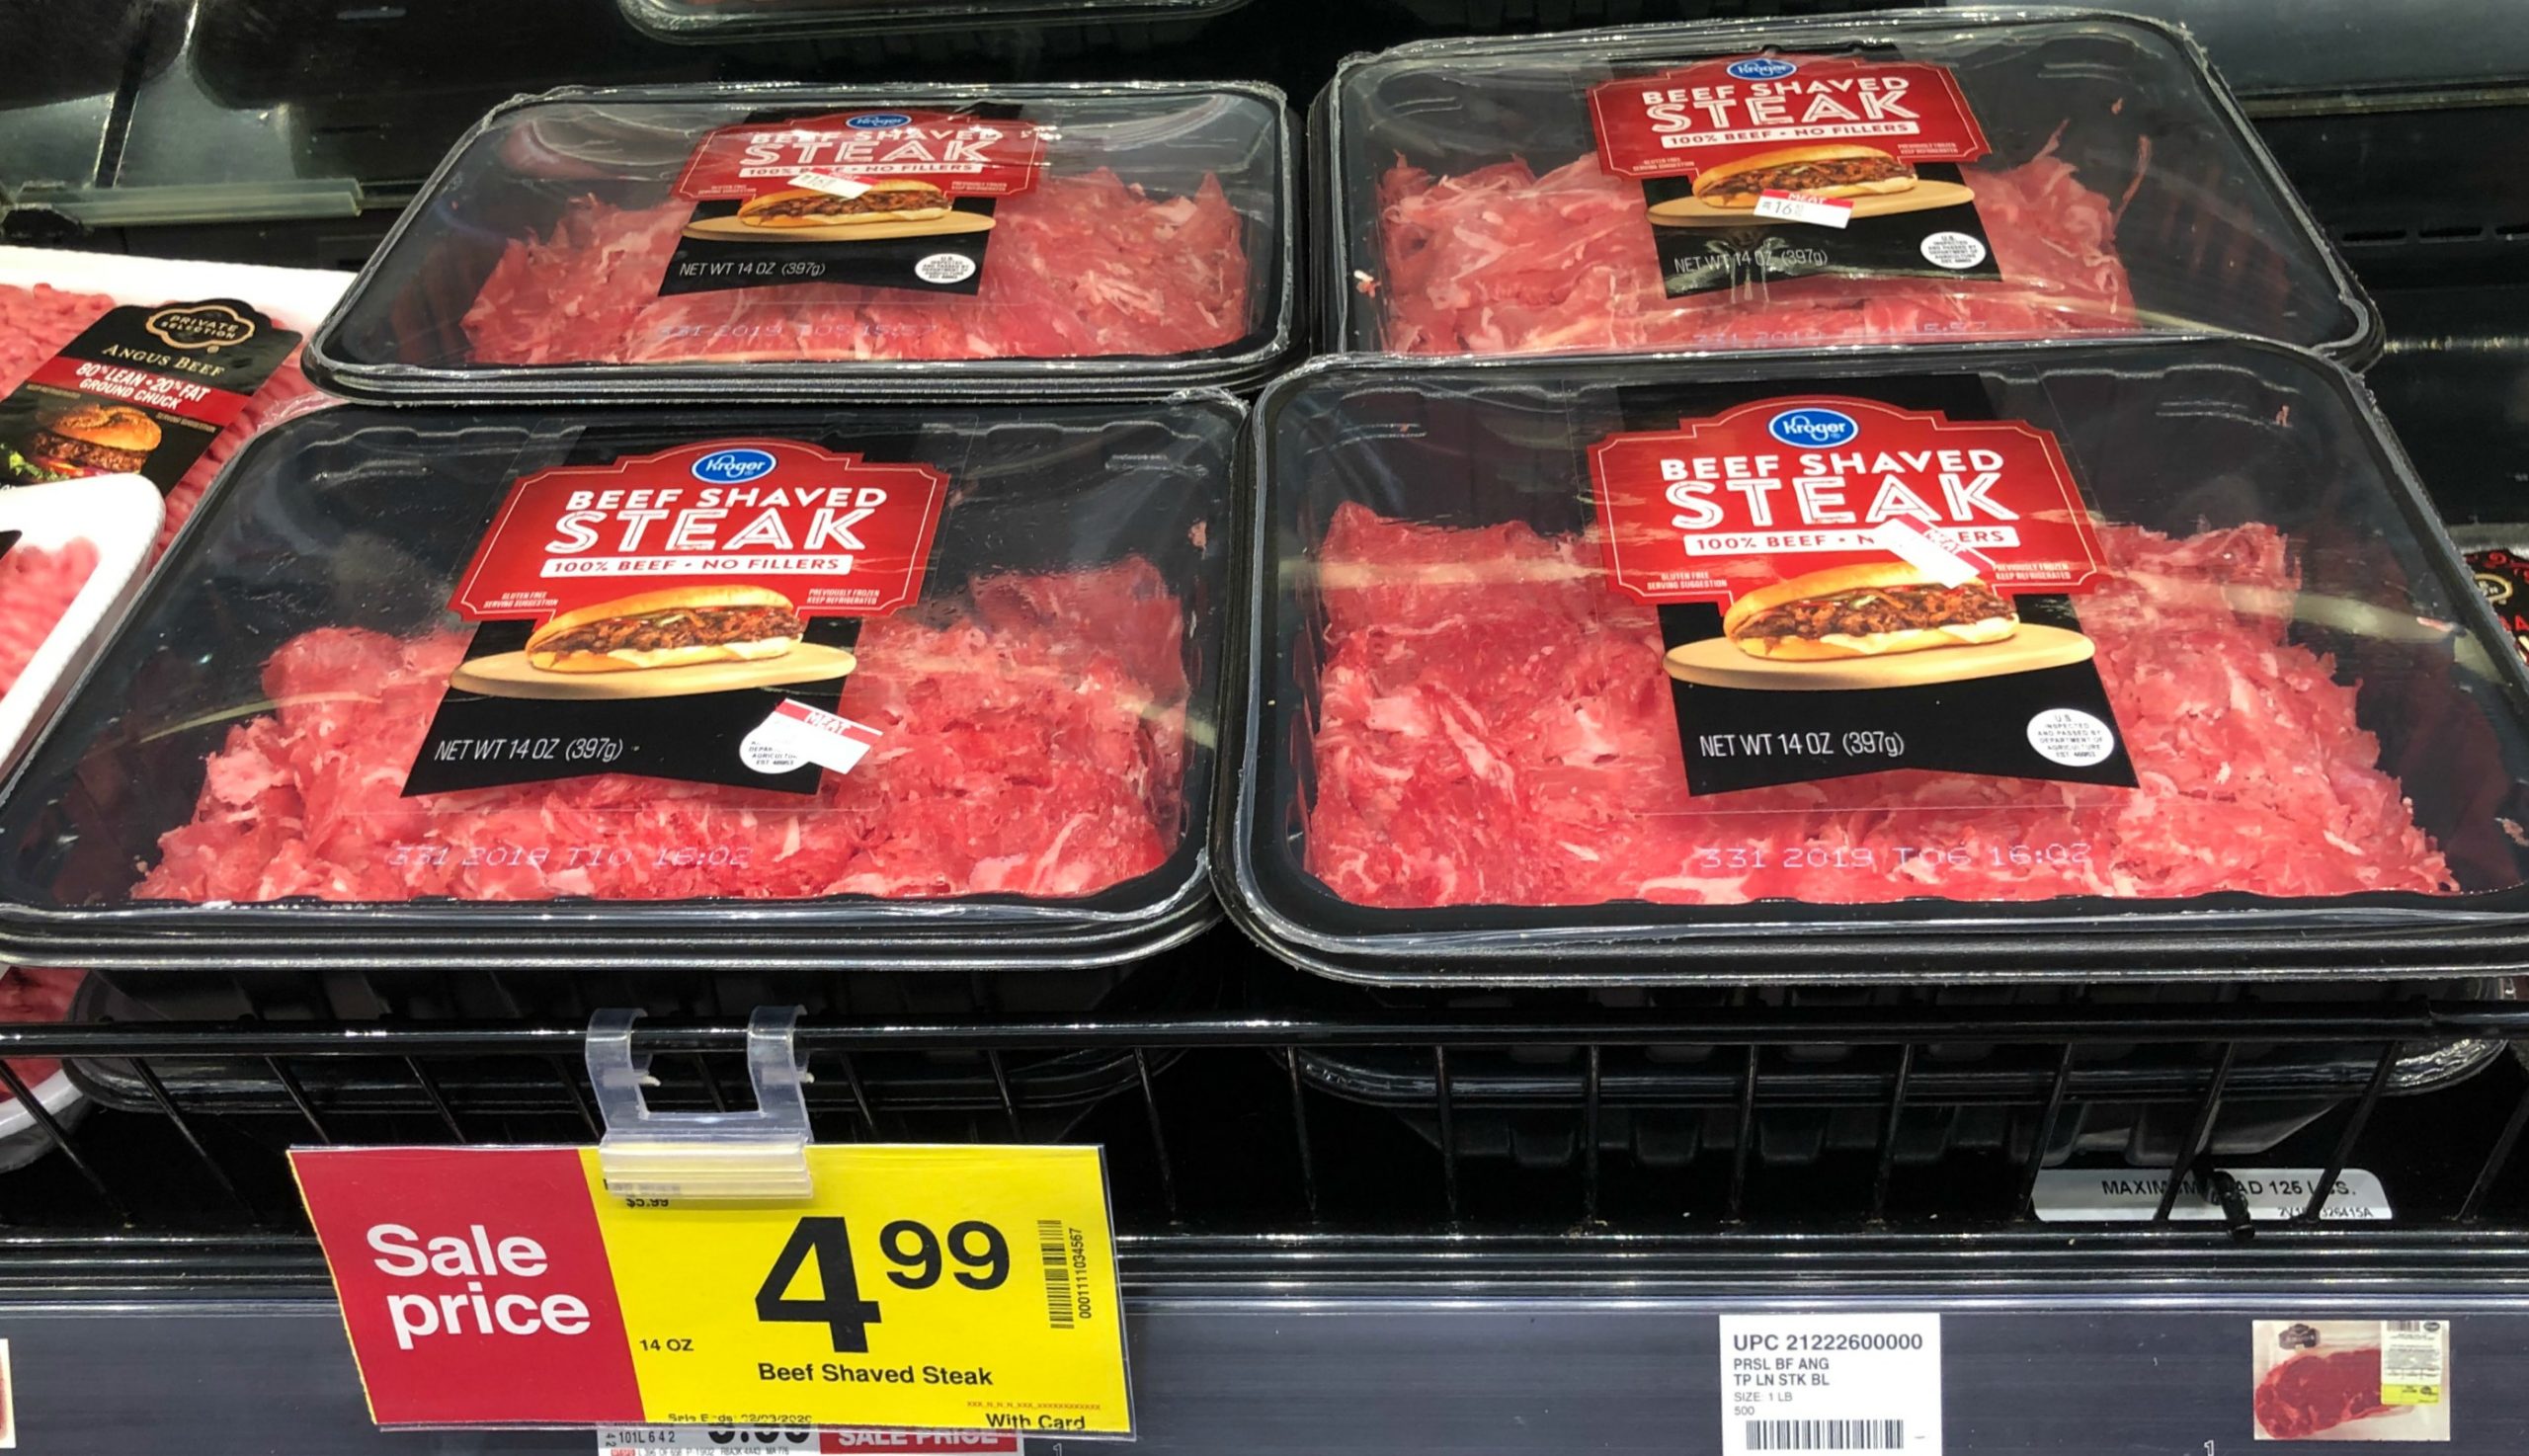 Kroger brand Beef Shaved Steak JUST $3.99!